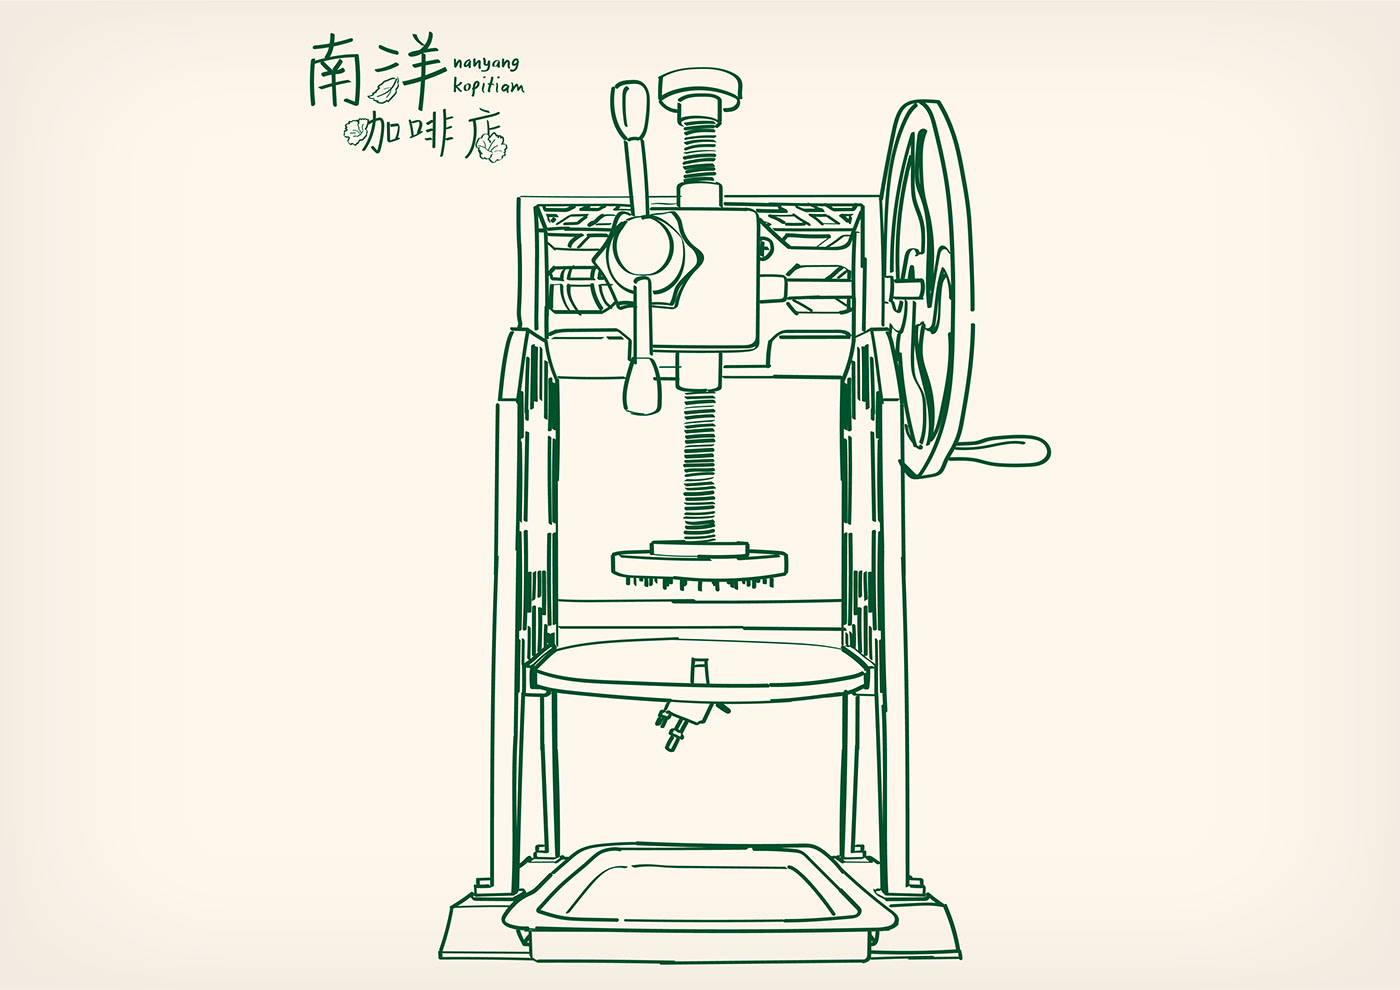 ais kacang bean ice doodle ice shaver ice shaver machine kopi kopitiam Nanyang teh vintage